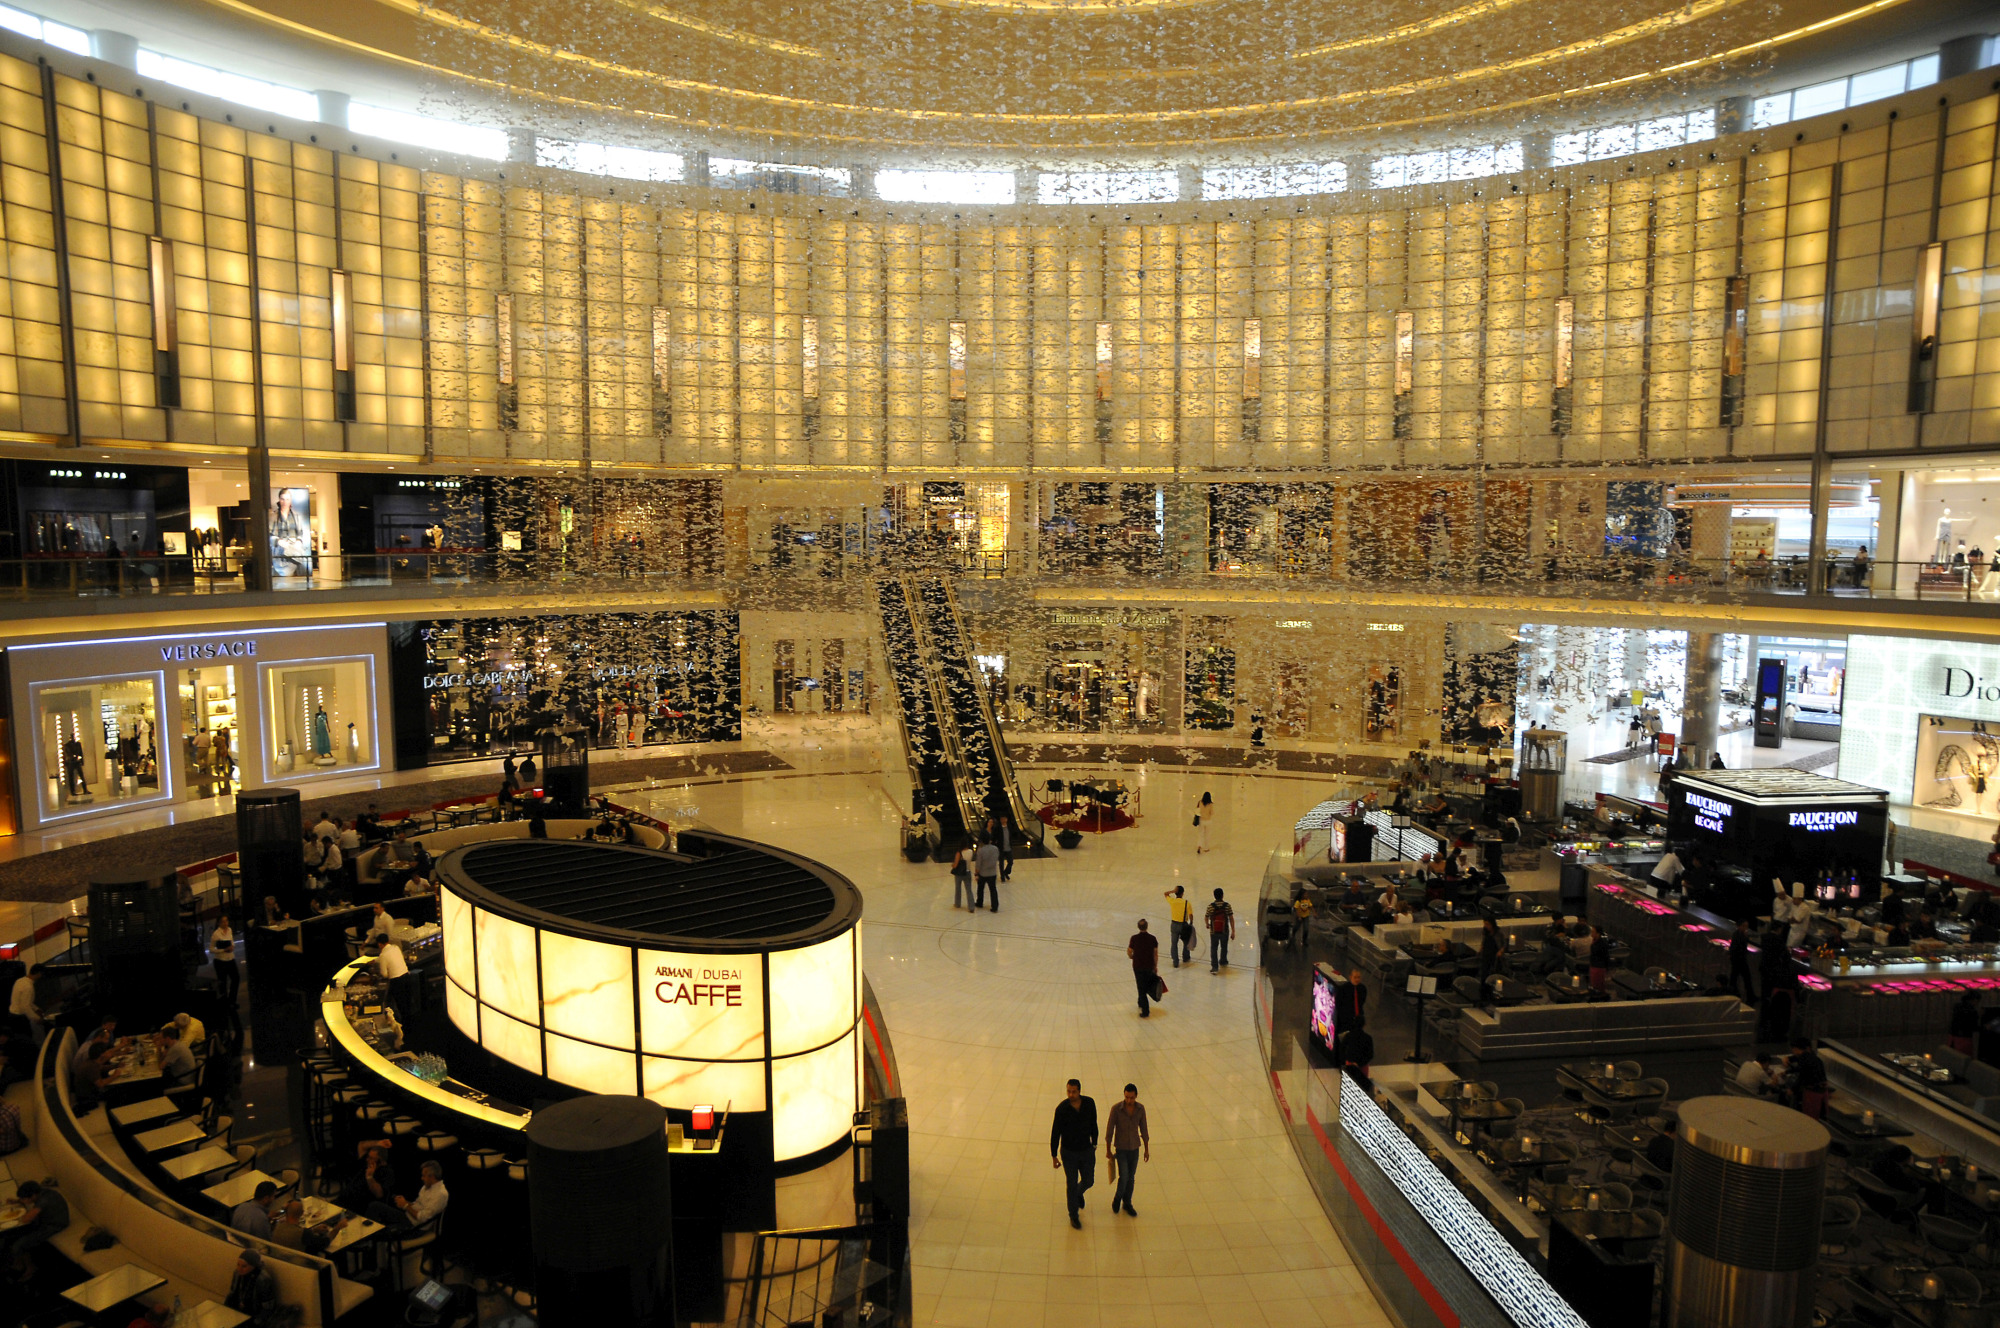 dubai mall inside view